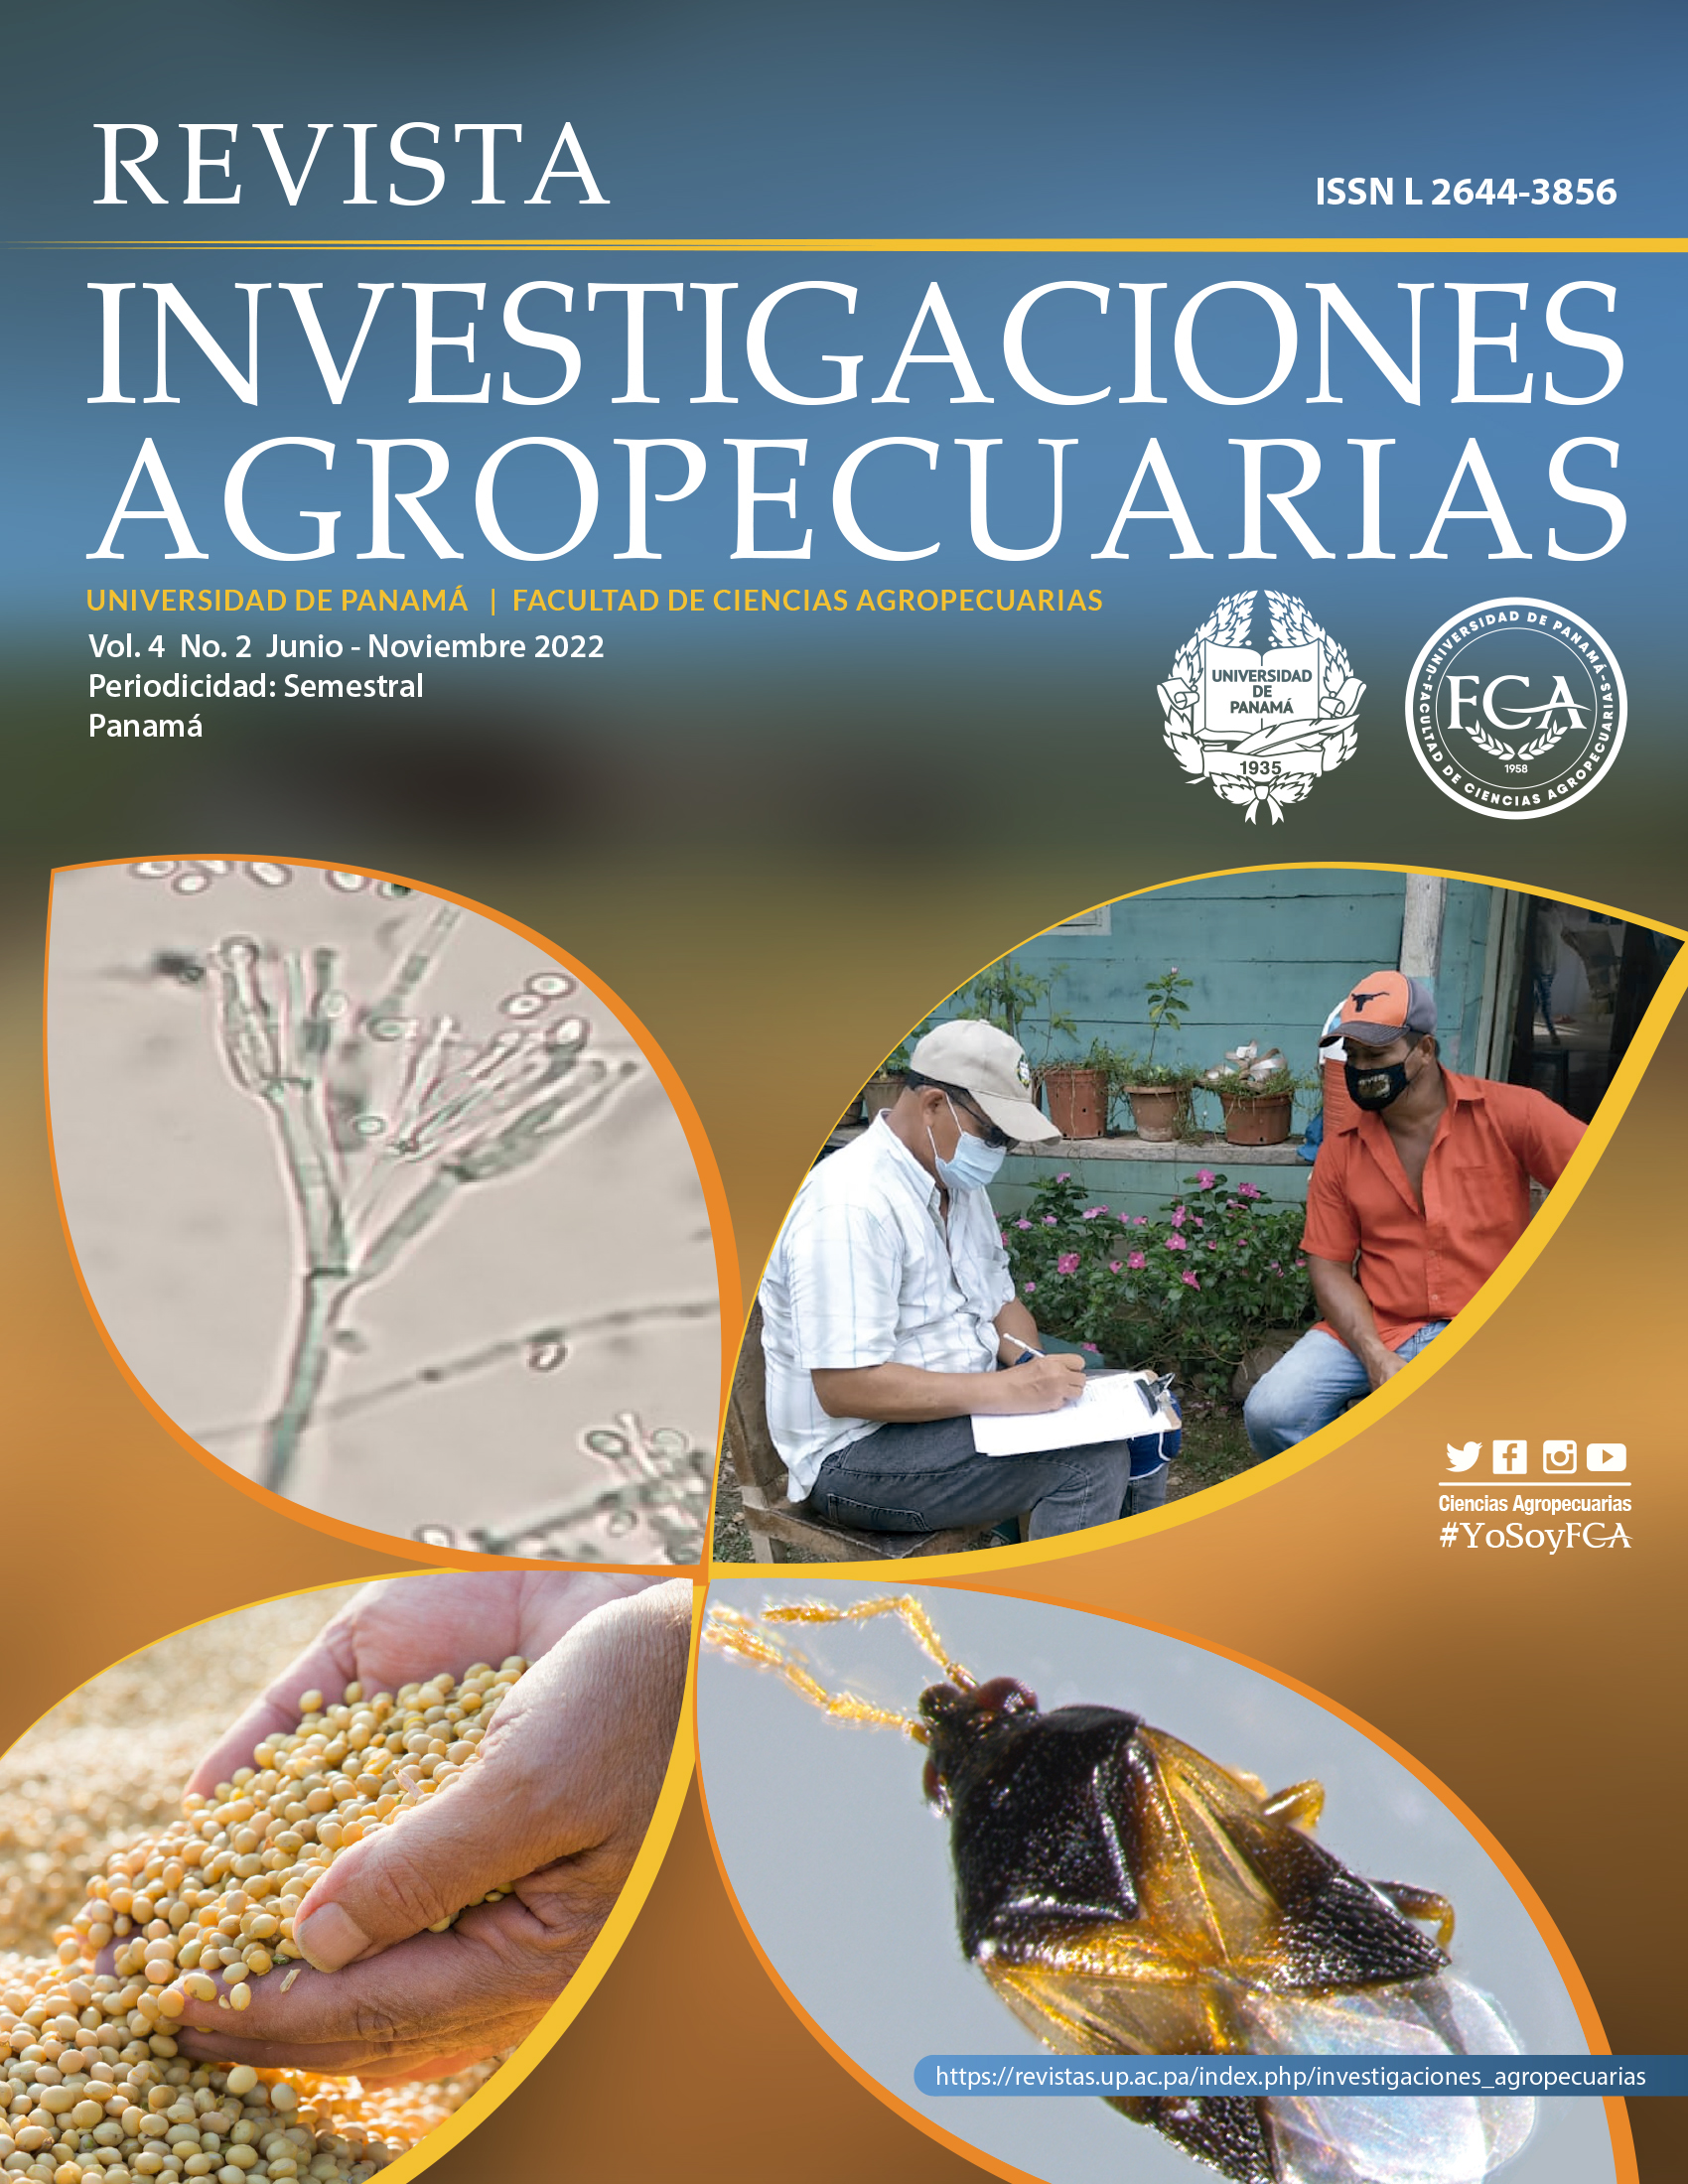 					Ver Vol. 4 Núm. 2: Revista Investigaciones Agropecuarias
				